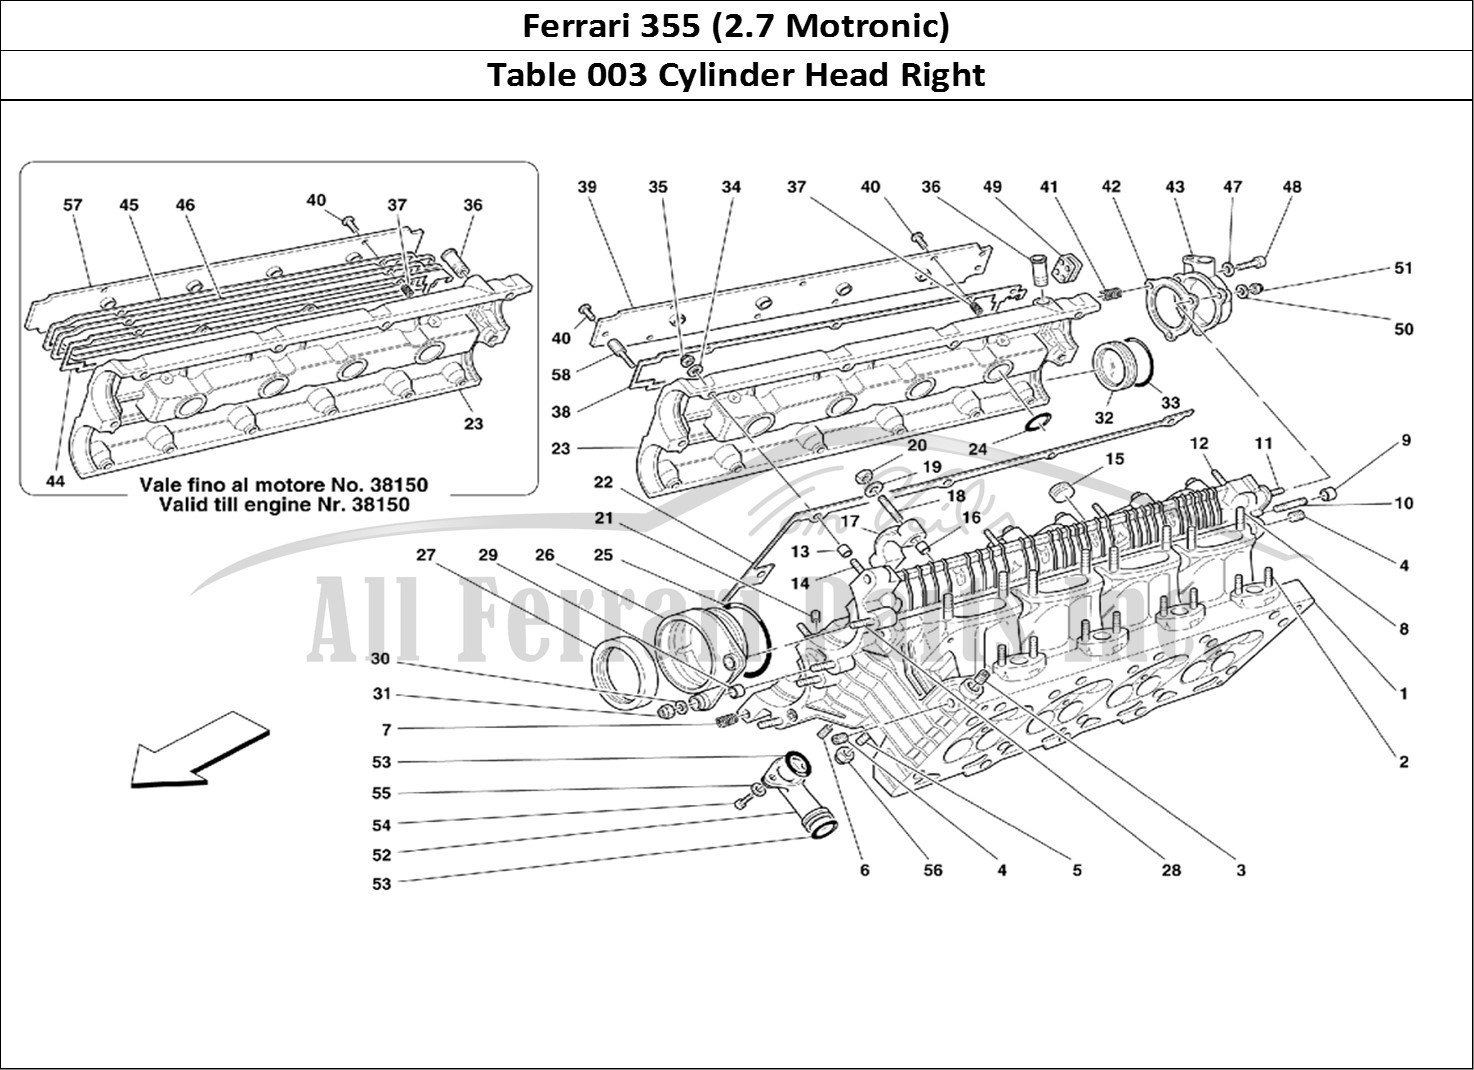 Ferrari Parts Ferrari 355 (2.7 Motronic) Page 003 R.H. Cylinder Head